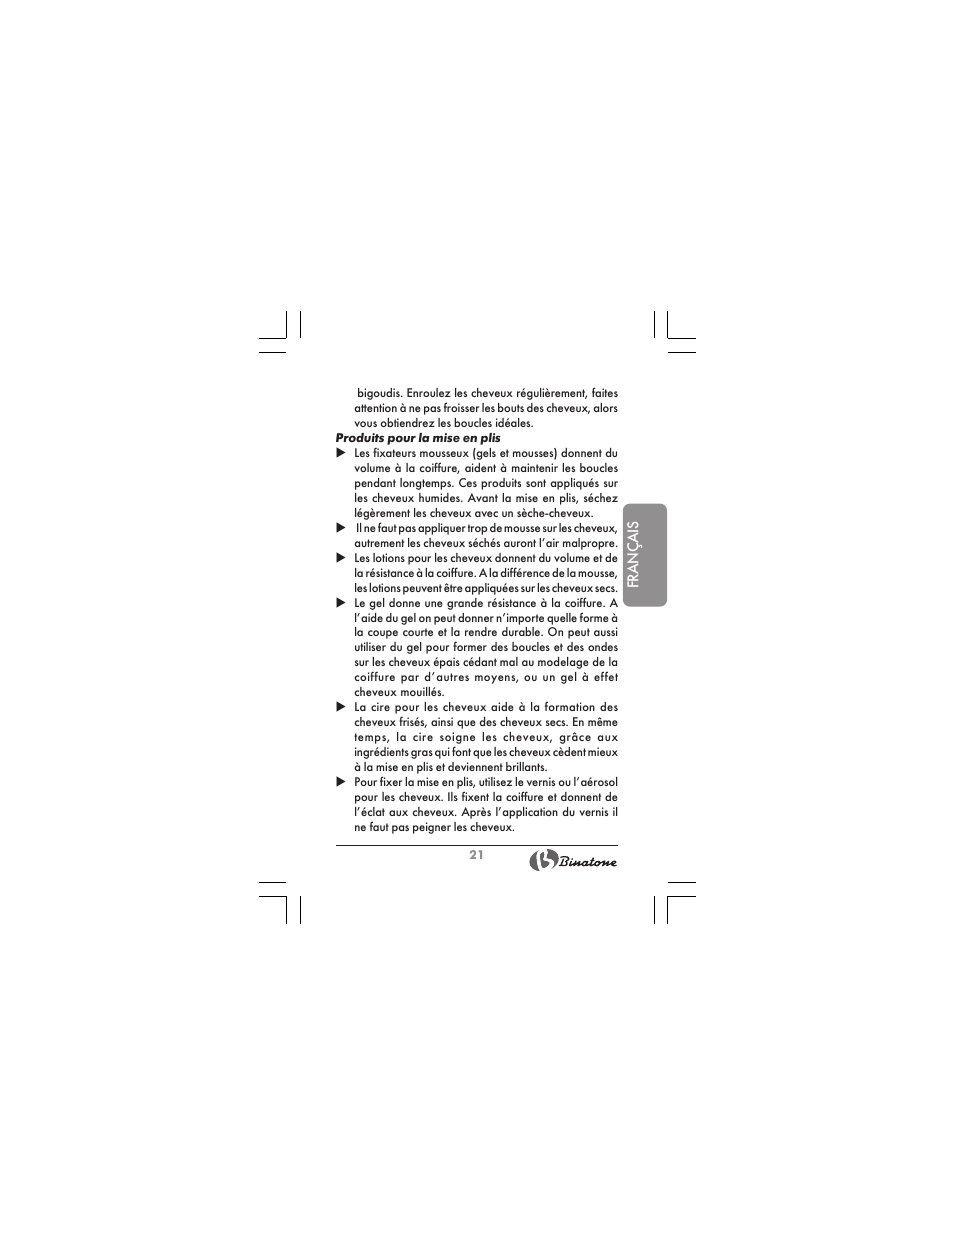 Binatone HR-09 User Manual | Page 21 / 48